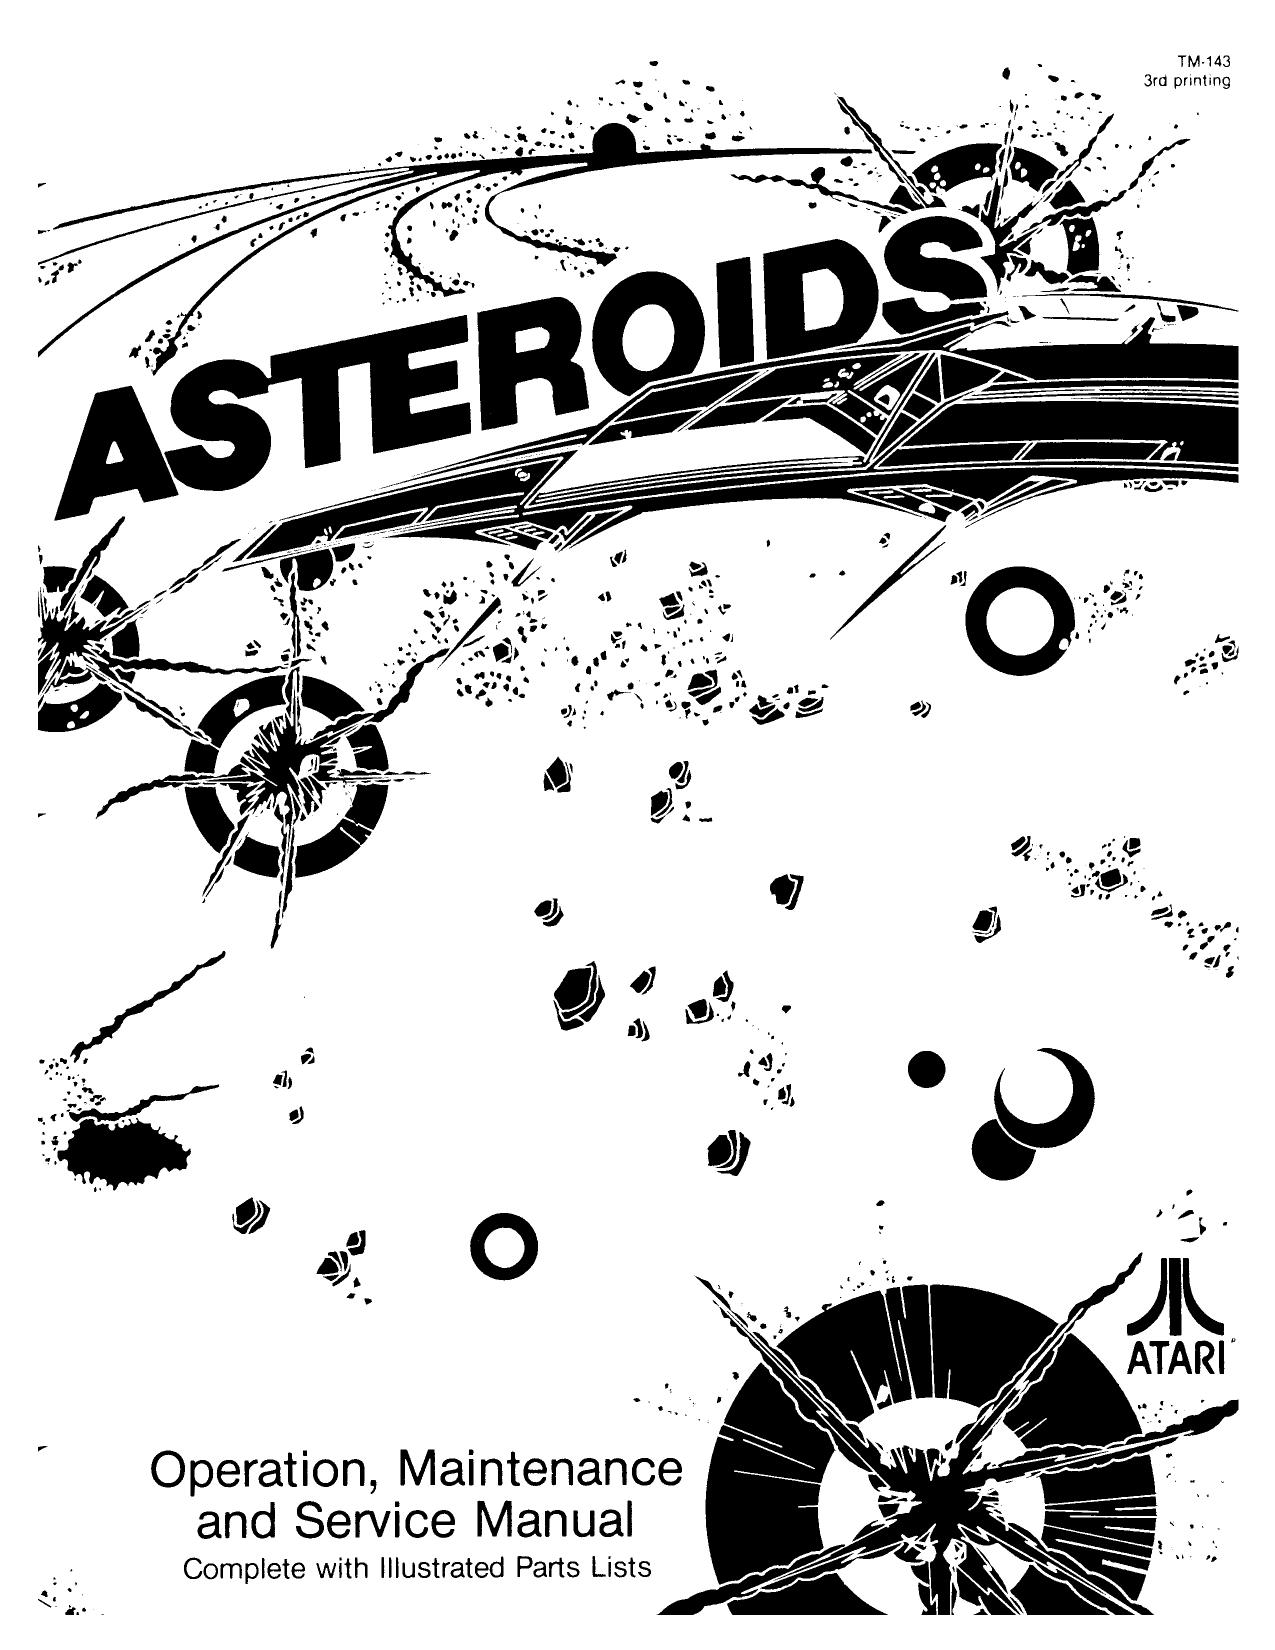 Asteroids TM-143 3rd Printing -2-